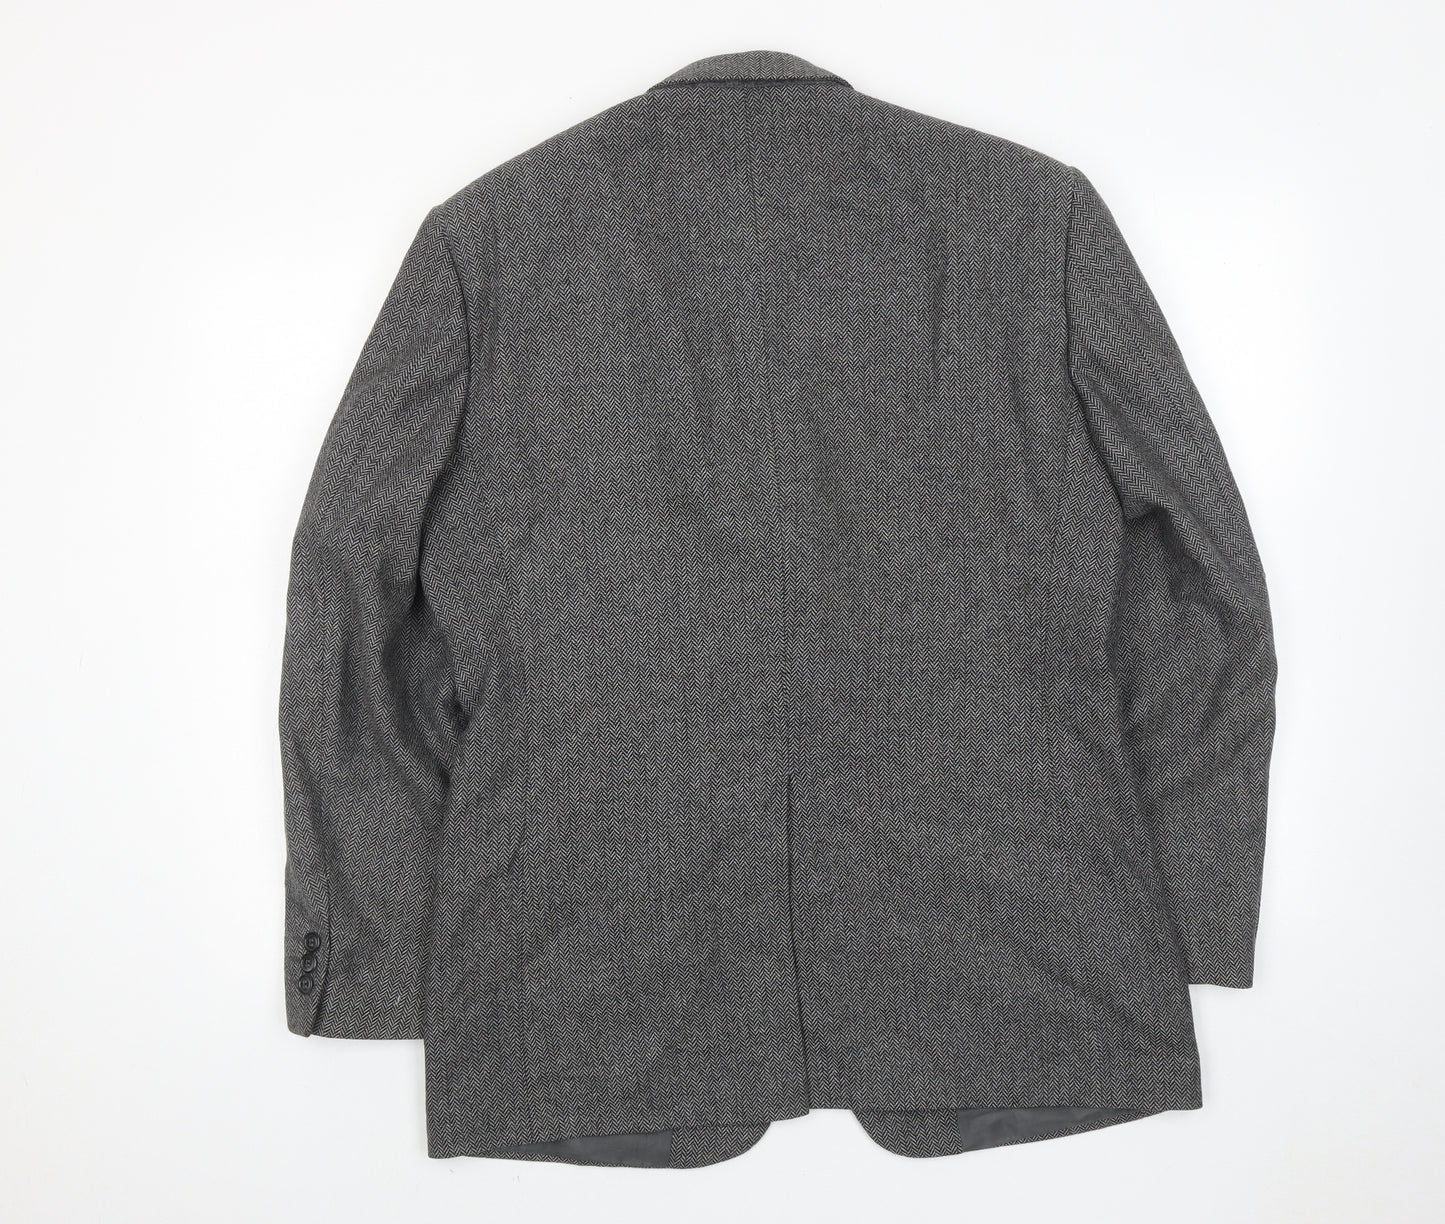 Greenwoods Mens Grey Wool Jacket Suit Jacket Size 38 Regular